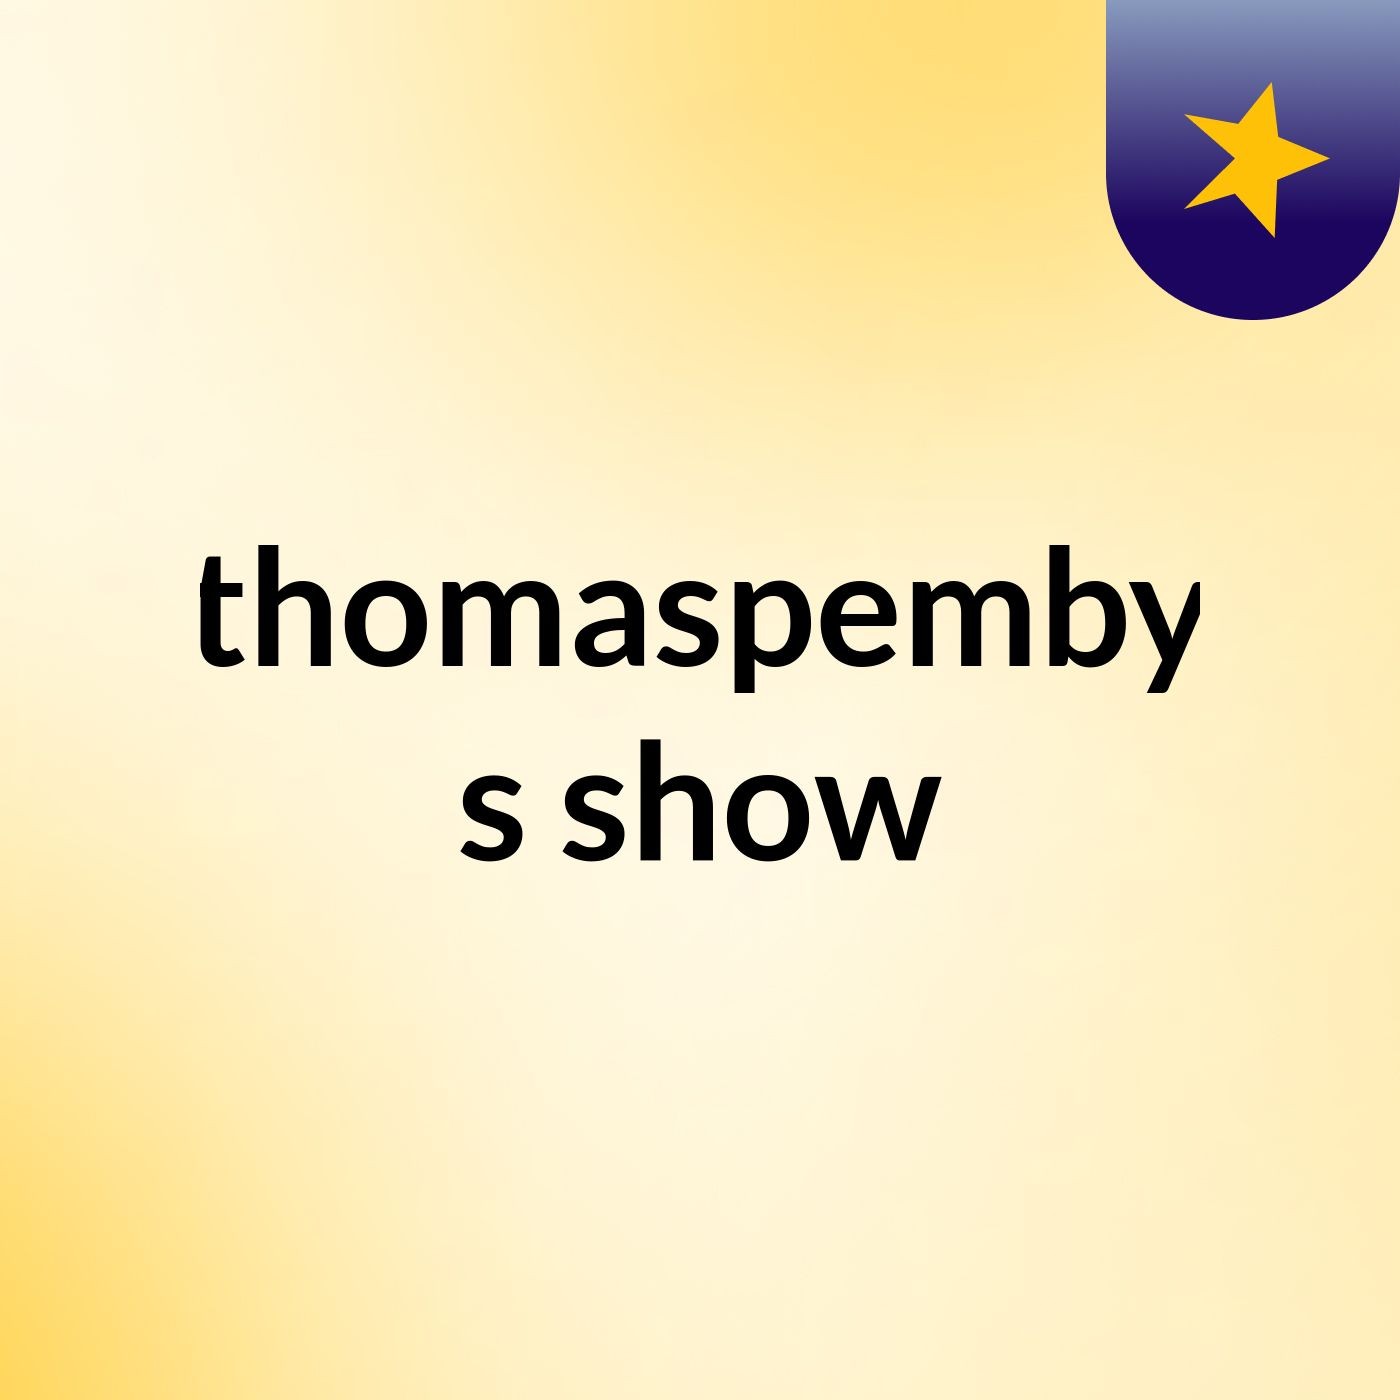 thomaspemby's show